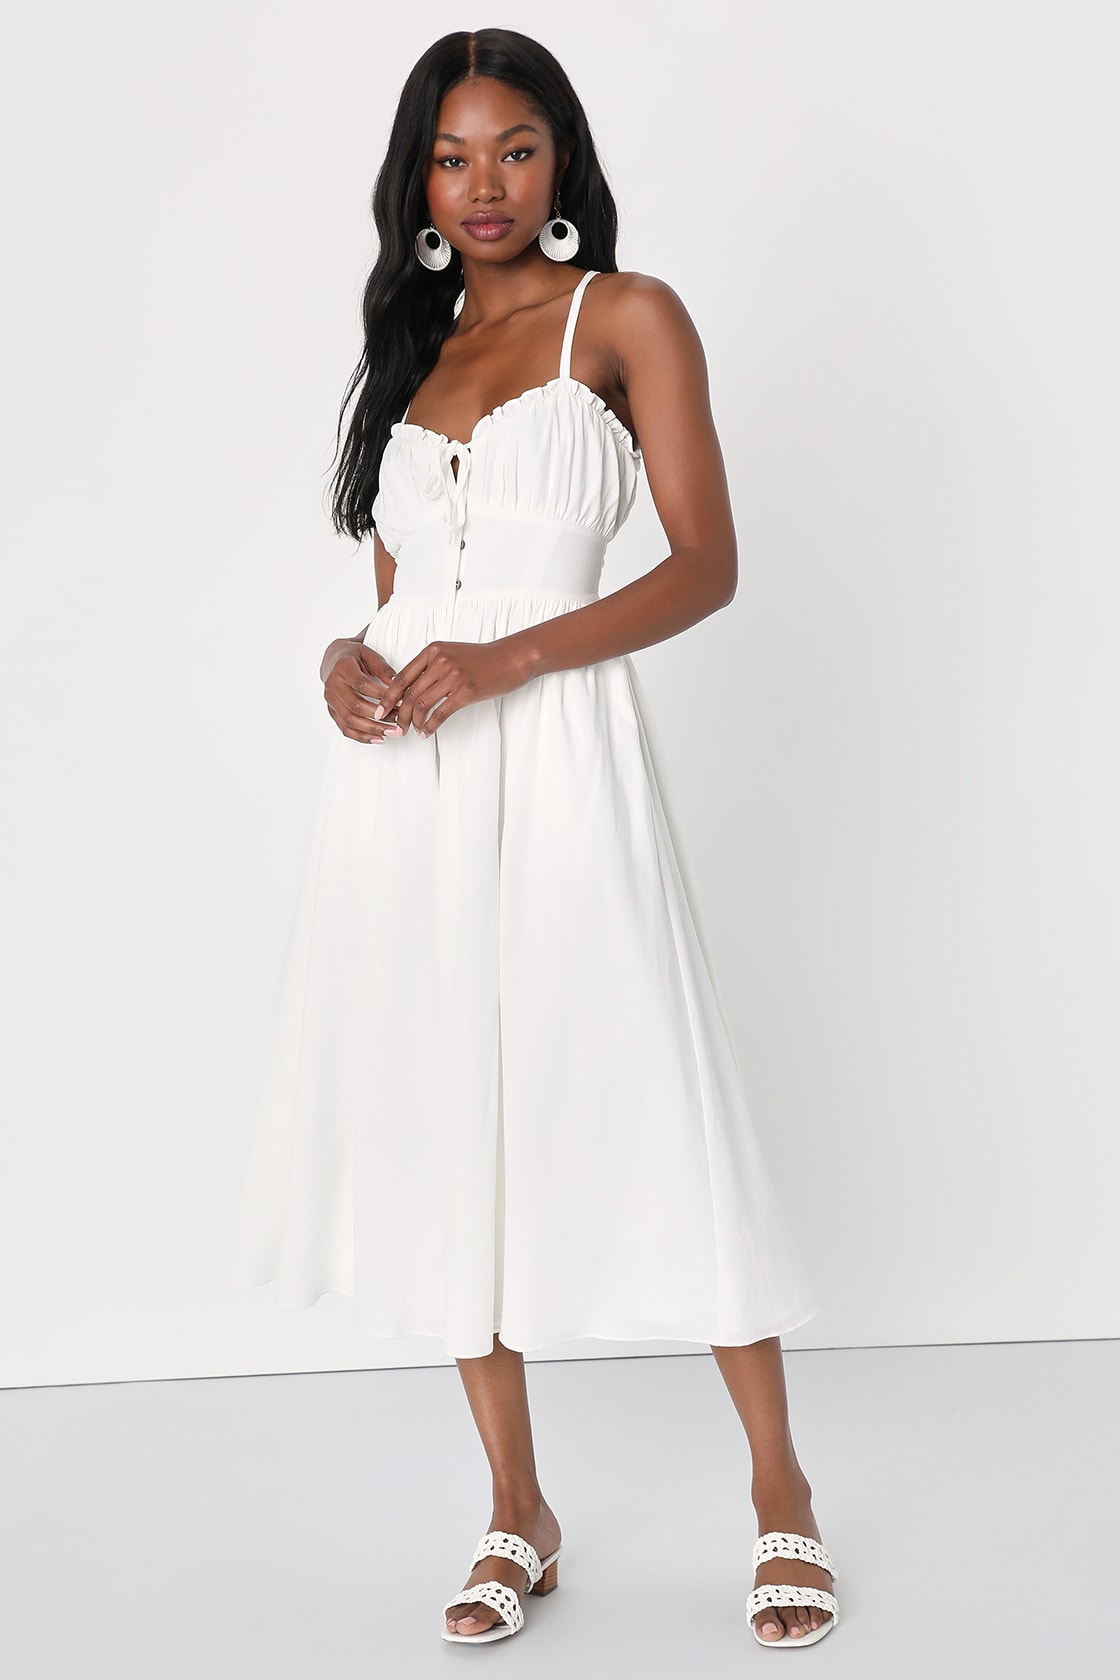 Portofino Perfection White Lace-Up Backless Midi Dress